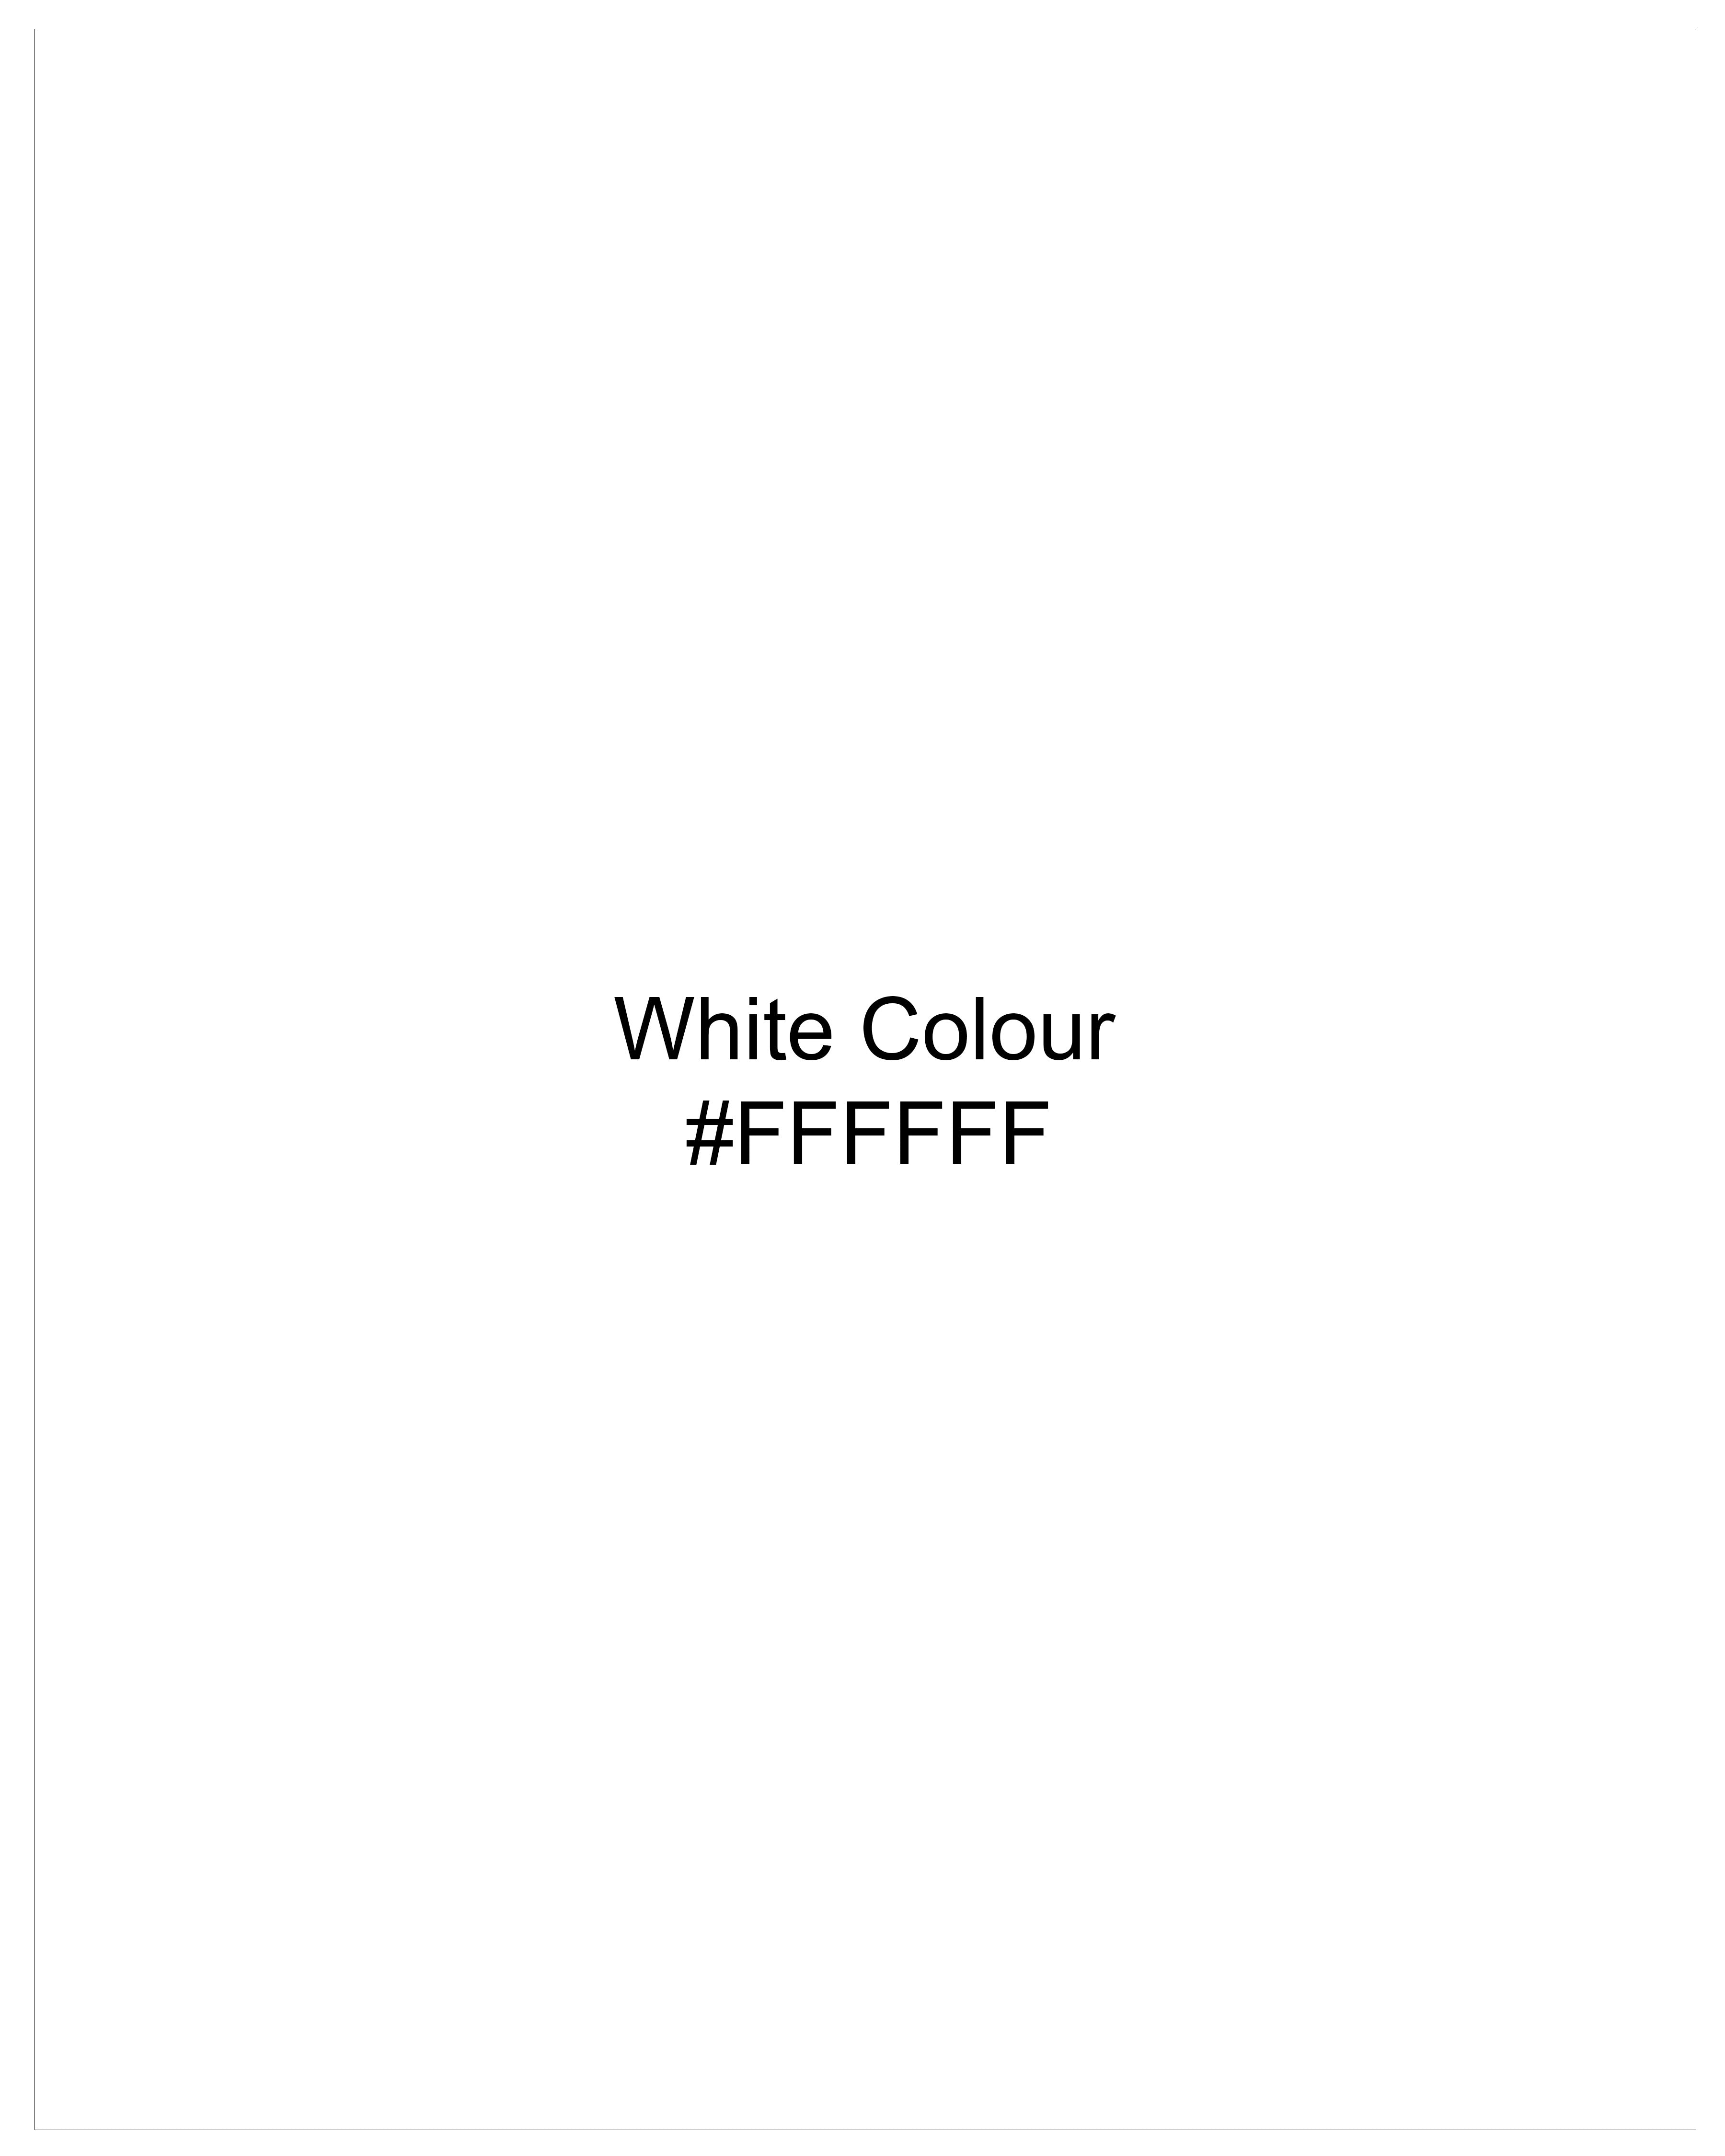 Bright White Luxurious Linen Kurta Shirt 9764-KS-WHITE-38, 9764-KS-WHITE-H-38, 9764-KS-WHITE-39, 9764-KS-WHITE-H-39, 9764-KS-WHITE-40, 9764-KS-WHITE-H-40, 9764-KS-WHITE-42, 9764-KS-WHITE-H-42, 9764-KS-WHITE-44, 9764-KS-WHITE-H-44, 9764-KS-WHITE-46, 9764-KS-WHITE-H-46, 9764-KS-WHITE-48, 9764-KS-WHITE-H-48, 9764-KS-WHITE-50, 9764-KS-WHITE-H-50, 9764-KS-WHITE-52, 9764-KS-WHITE-H-52